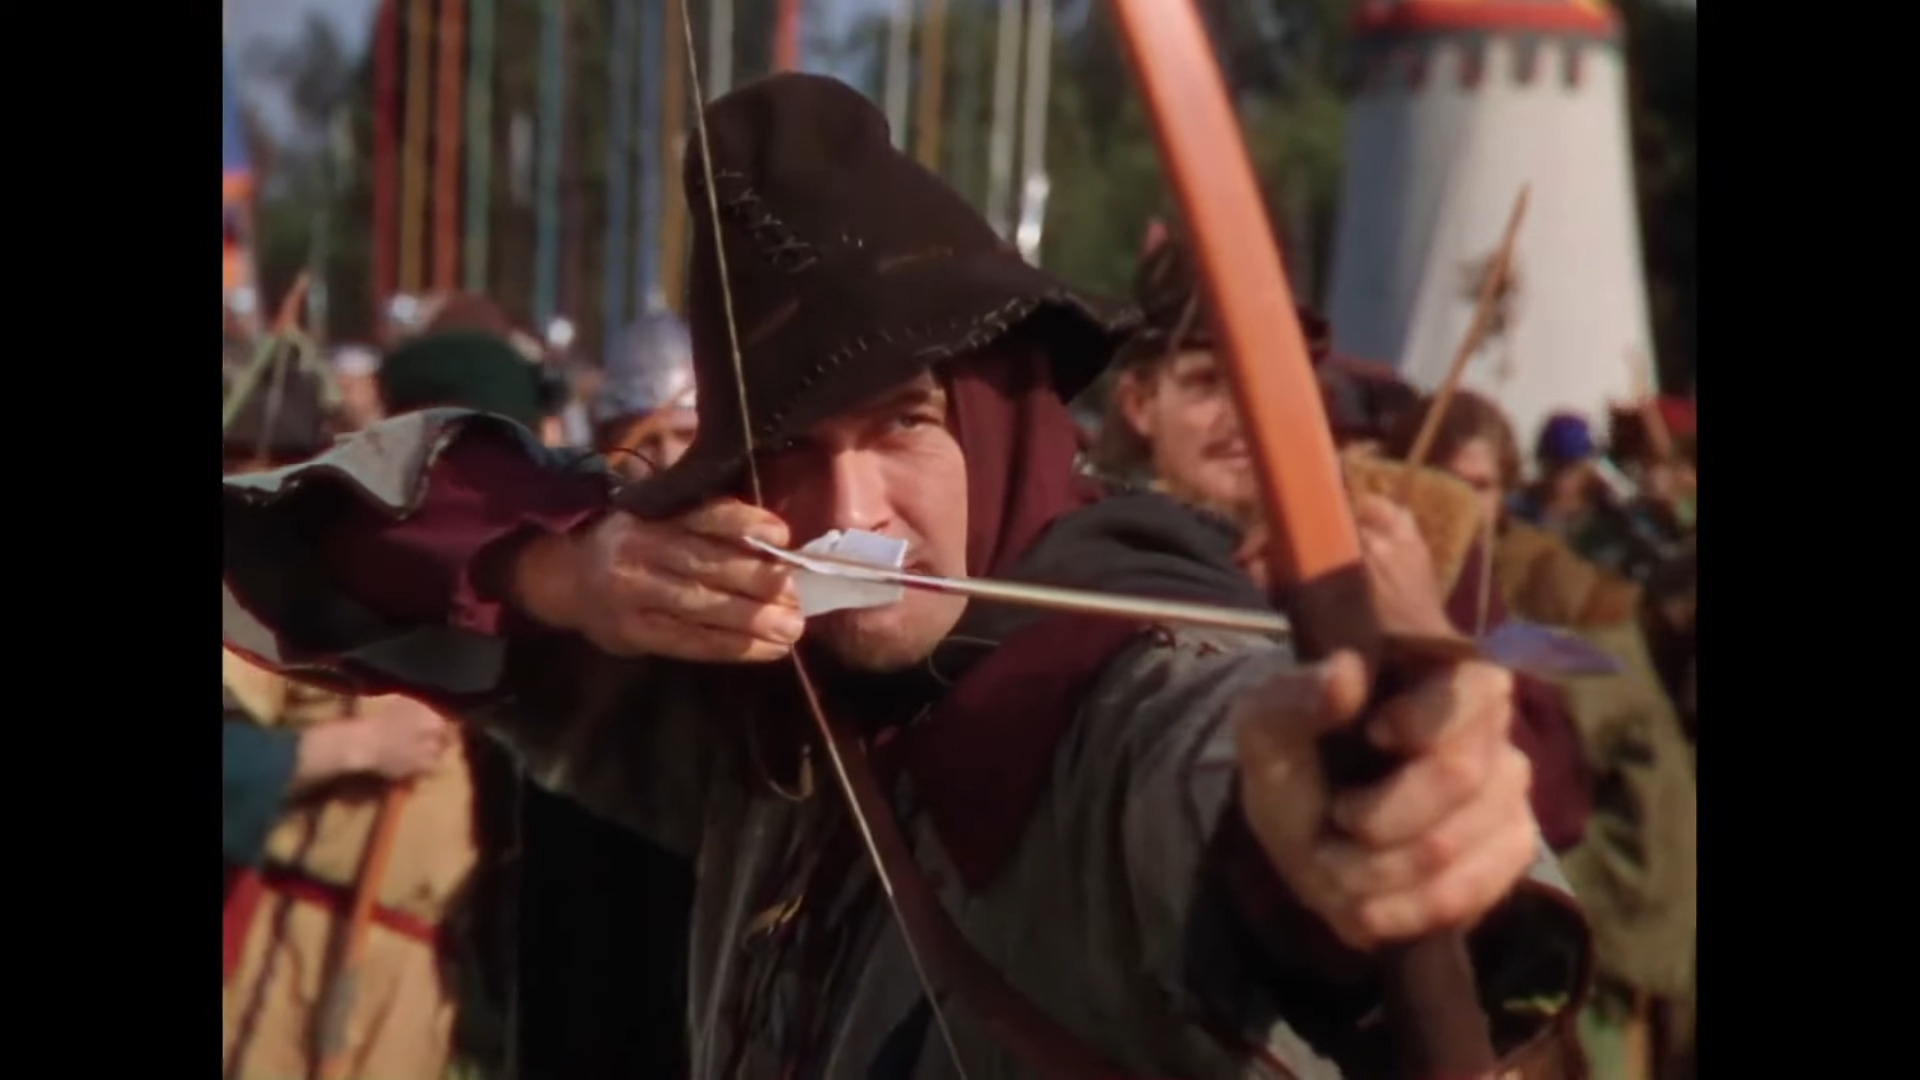 Robin Hood (Errol Flynn) knocks an arrow during King Richard's (Ian Hunter) archery tournament in The Adventures of Robin Hood (1938), Warner Bros. Pictures